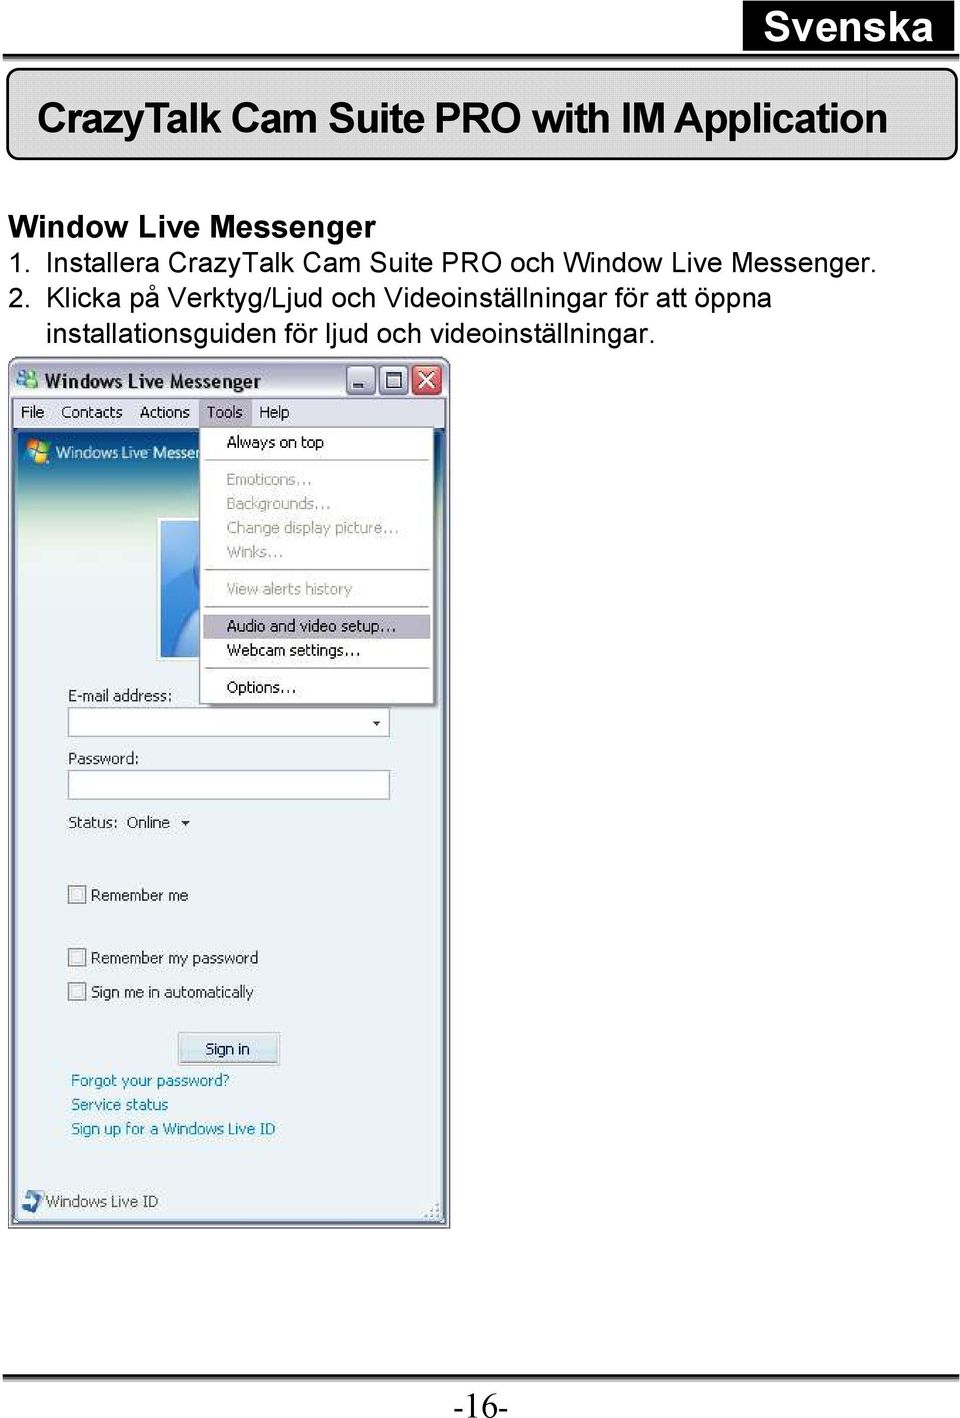 Installera CrazyTalk Cam Suite PRO och Window Live Messenger.